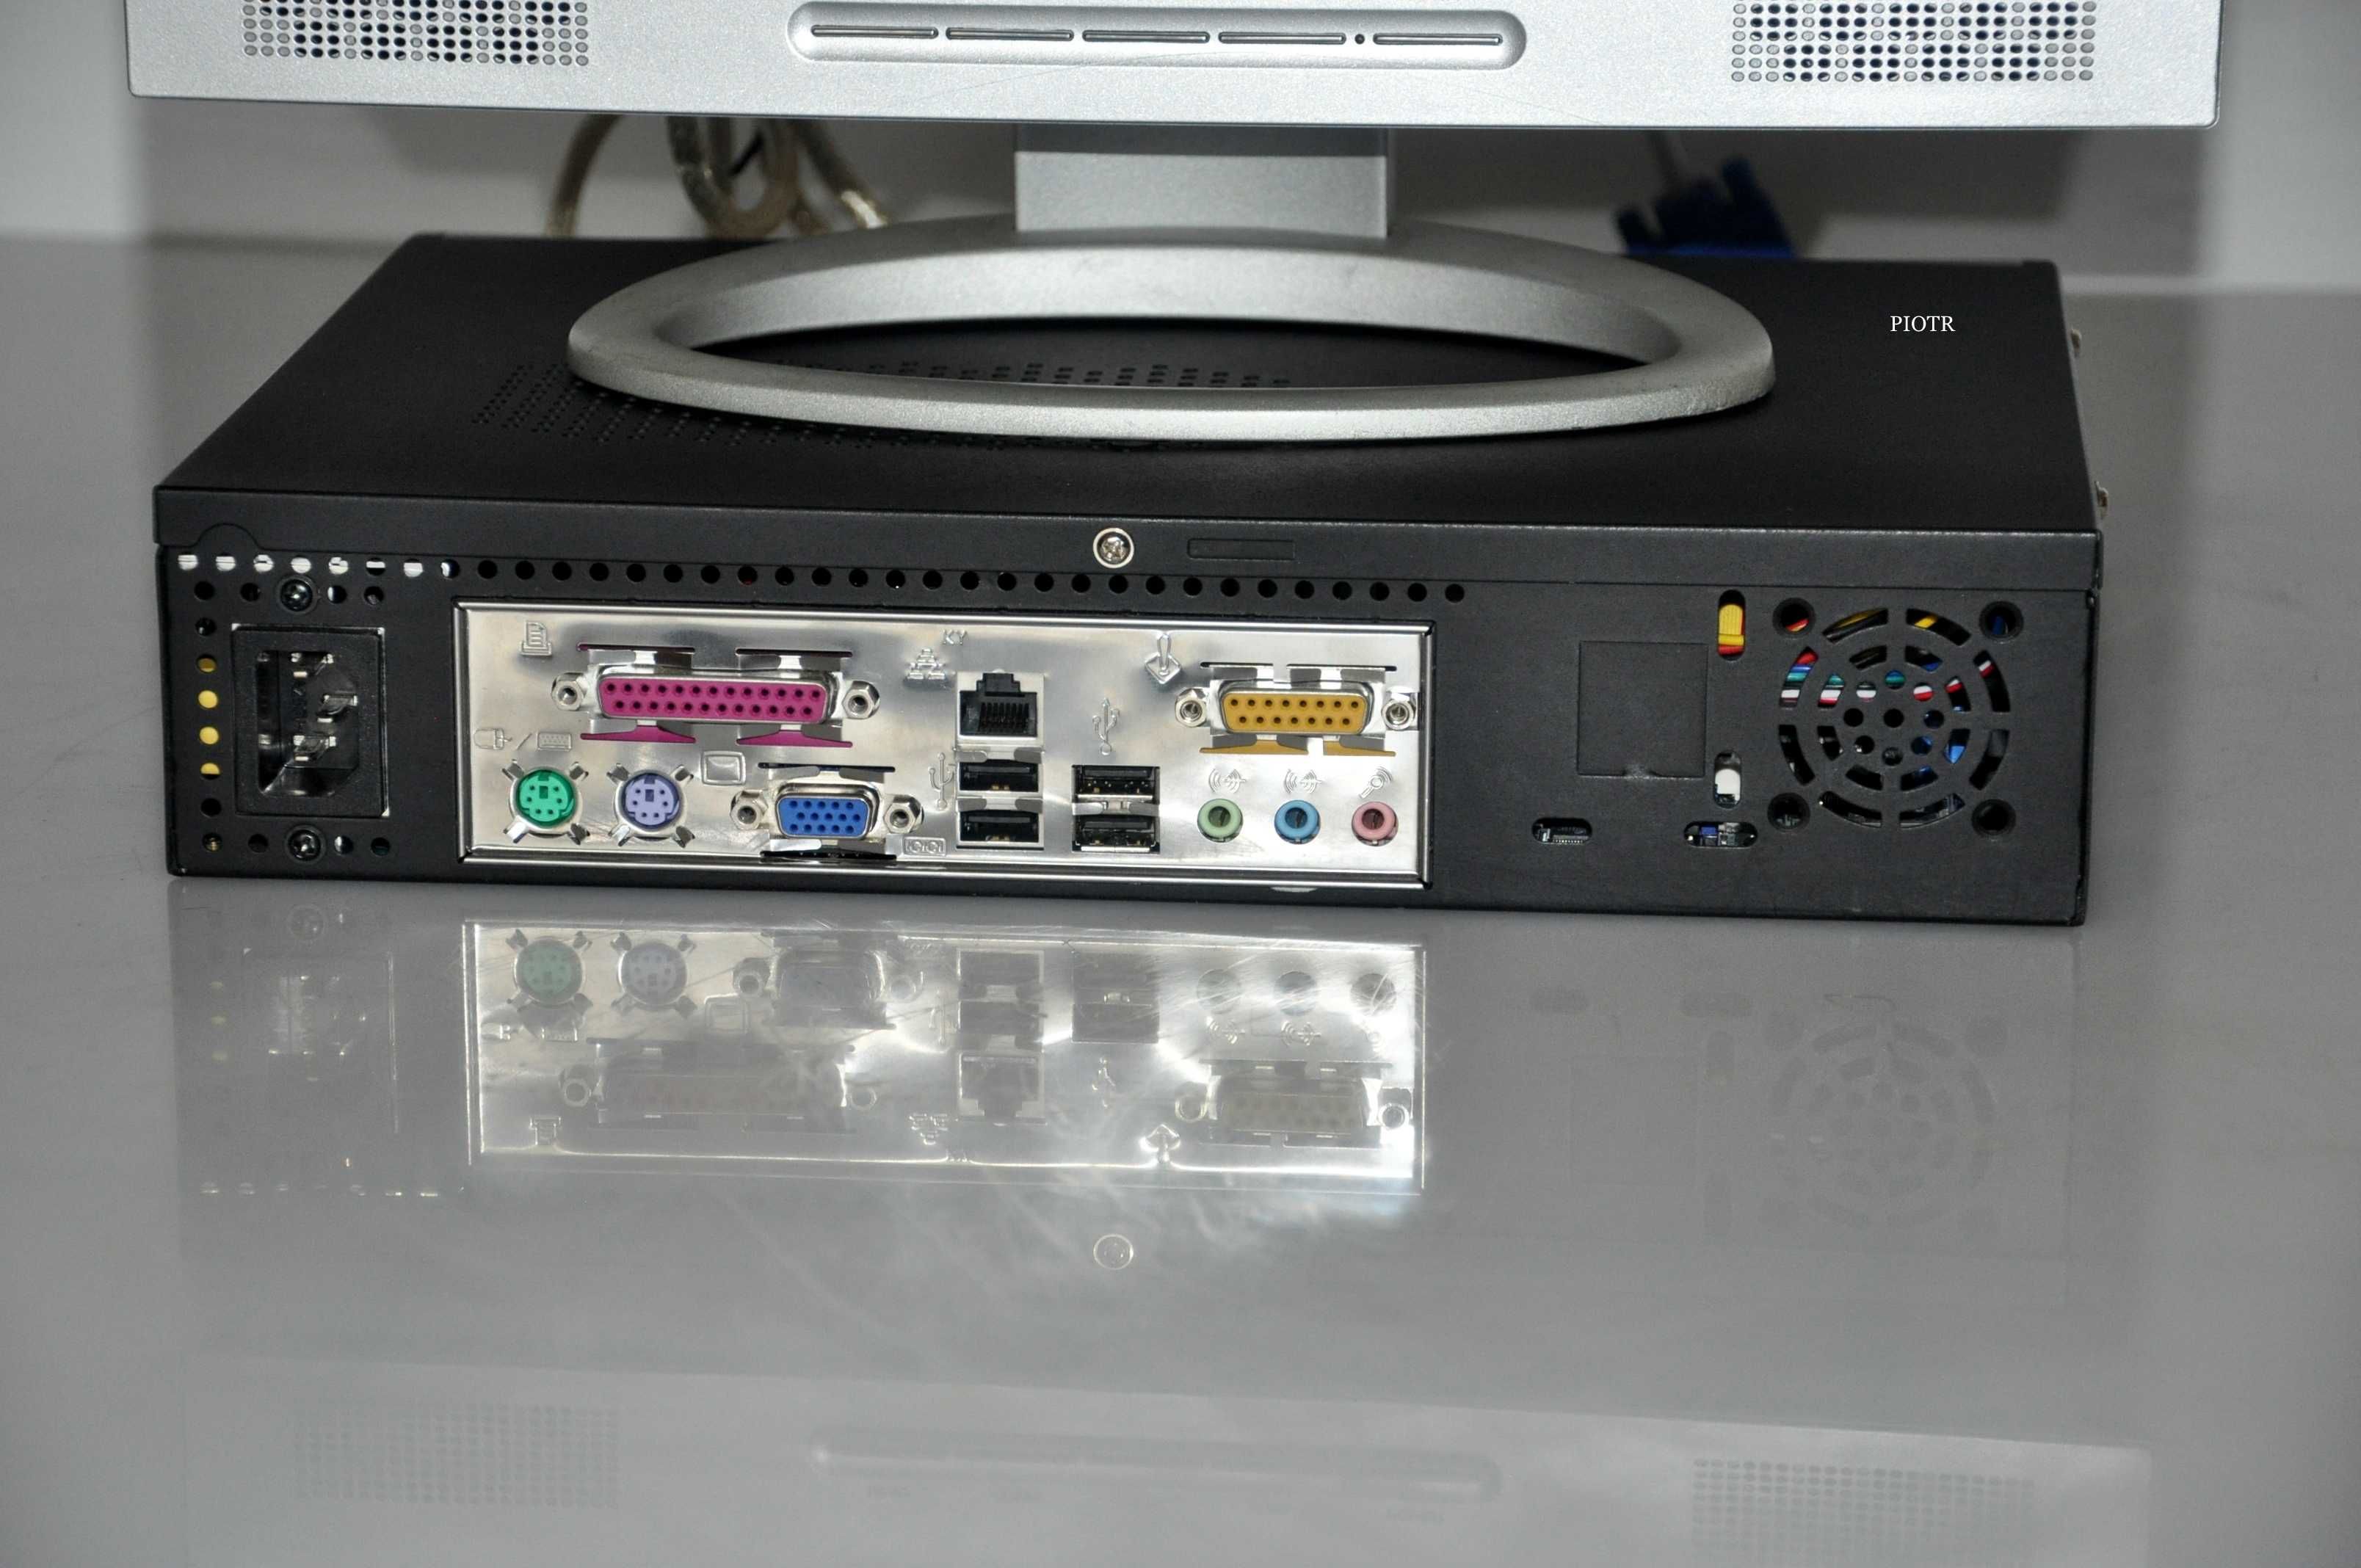 Komputer RETRO z monitorem LCD 14 " .